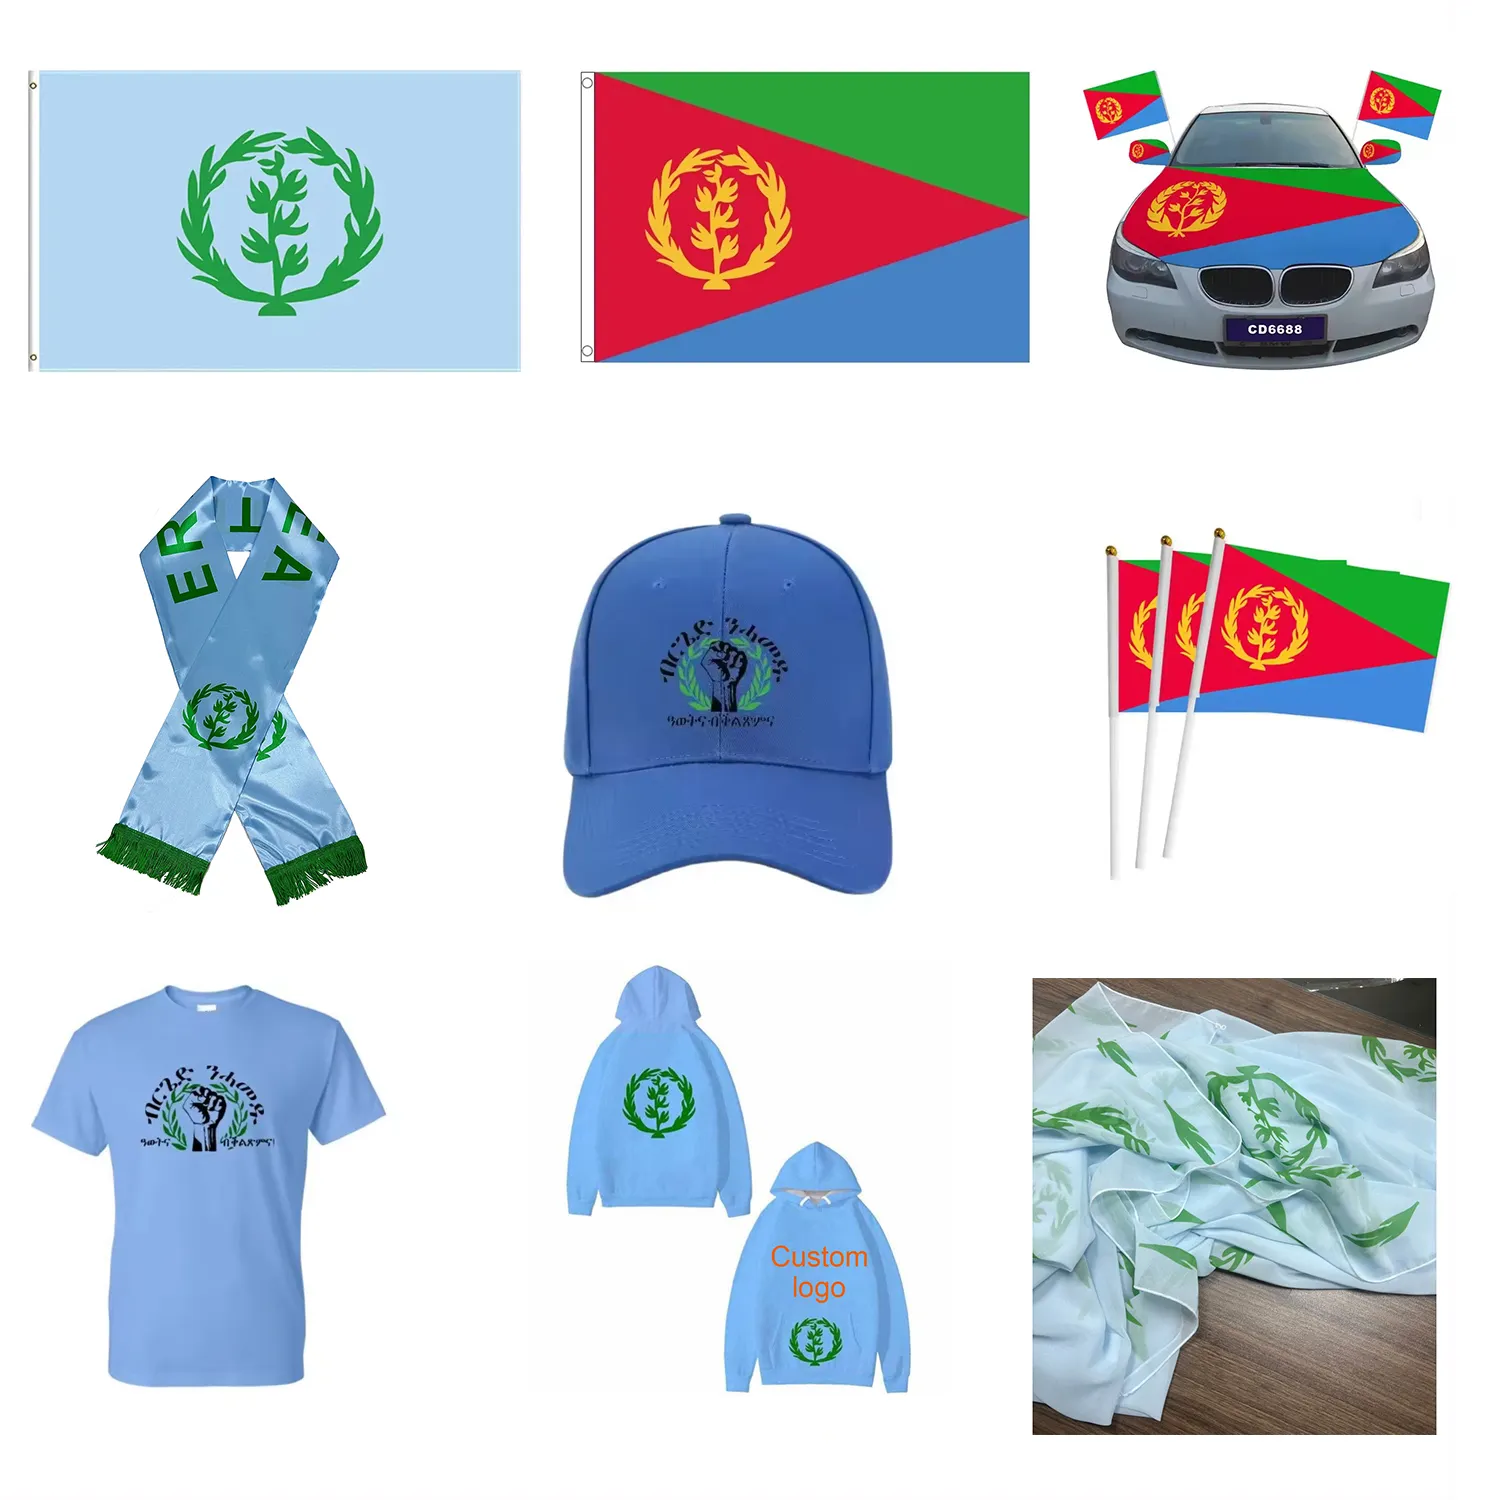 Promotional traditional eritrea scarf digital printing with eritrean scarves custom eritrea flag scarf